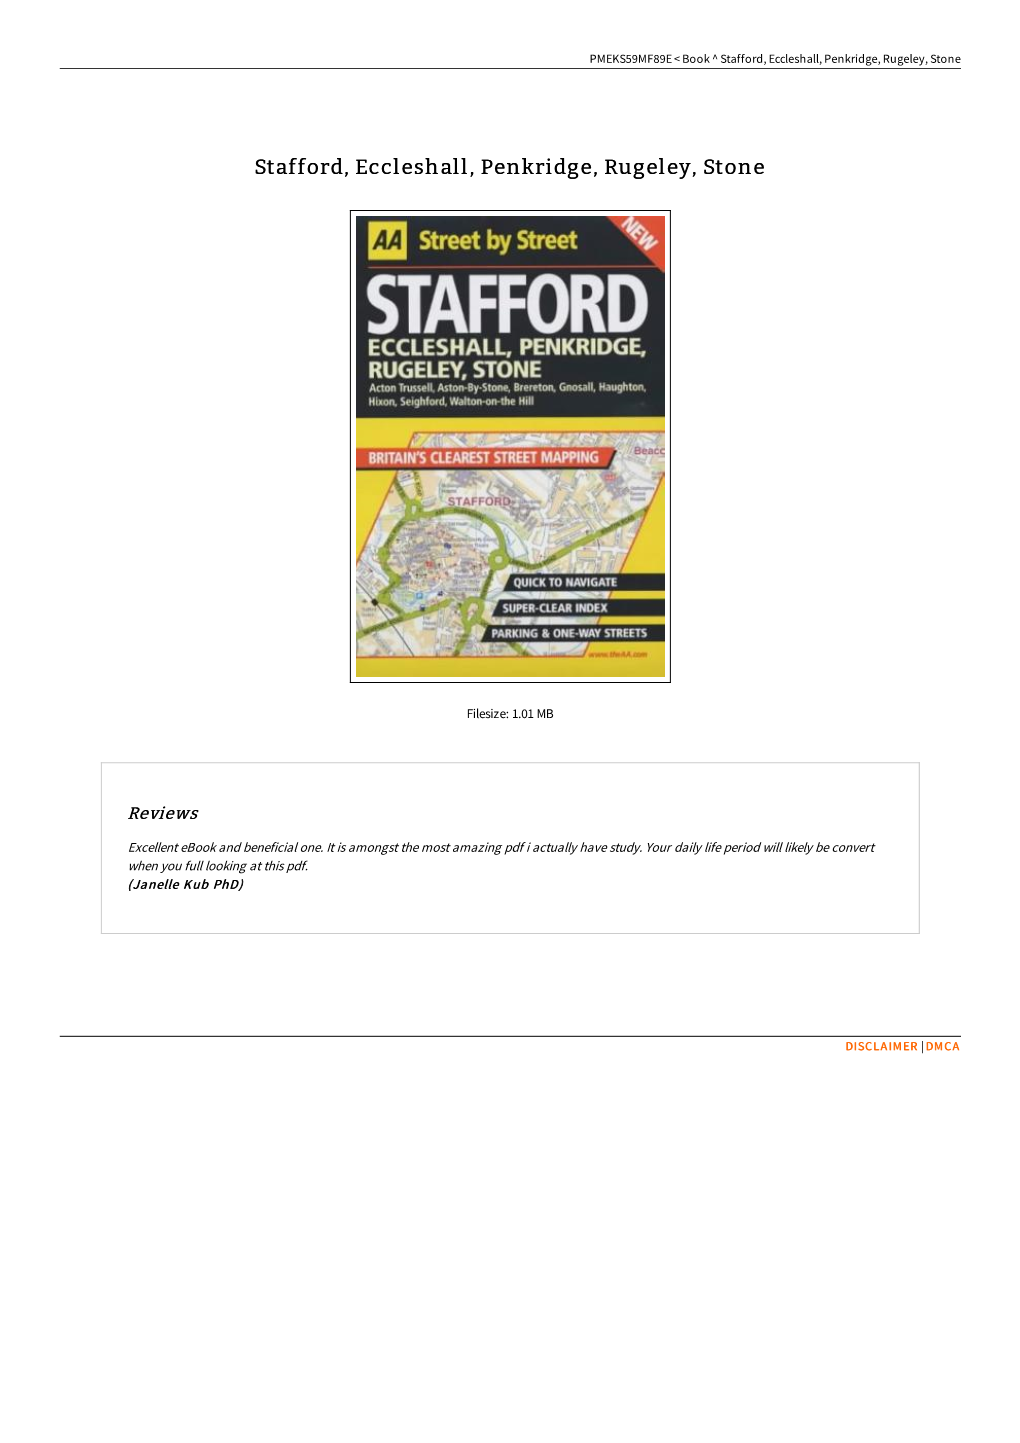 Find Ebook # Stafford, Eccleshall, Penkridge, Rugeley, Stone